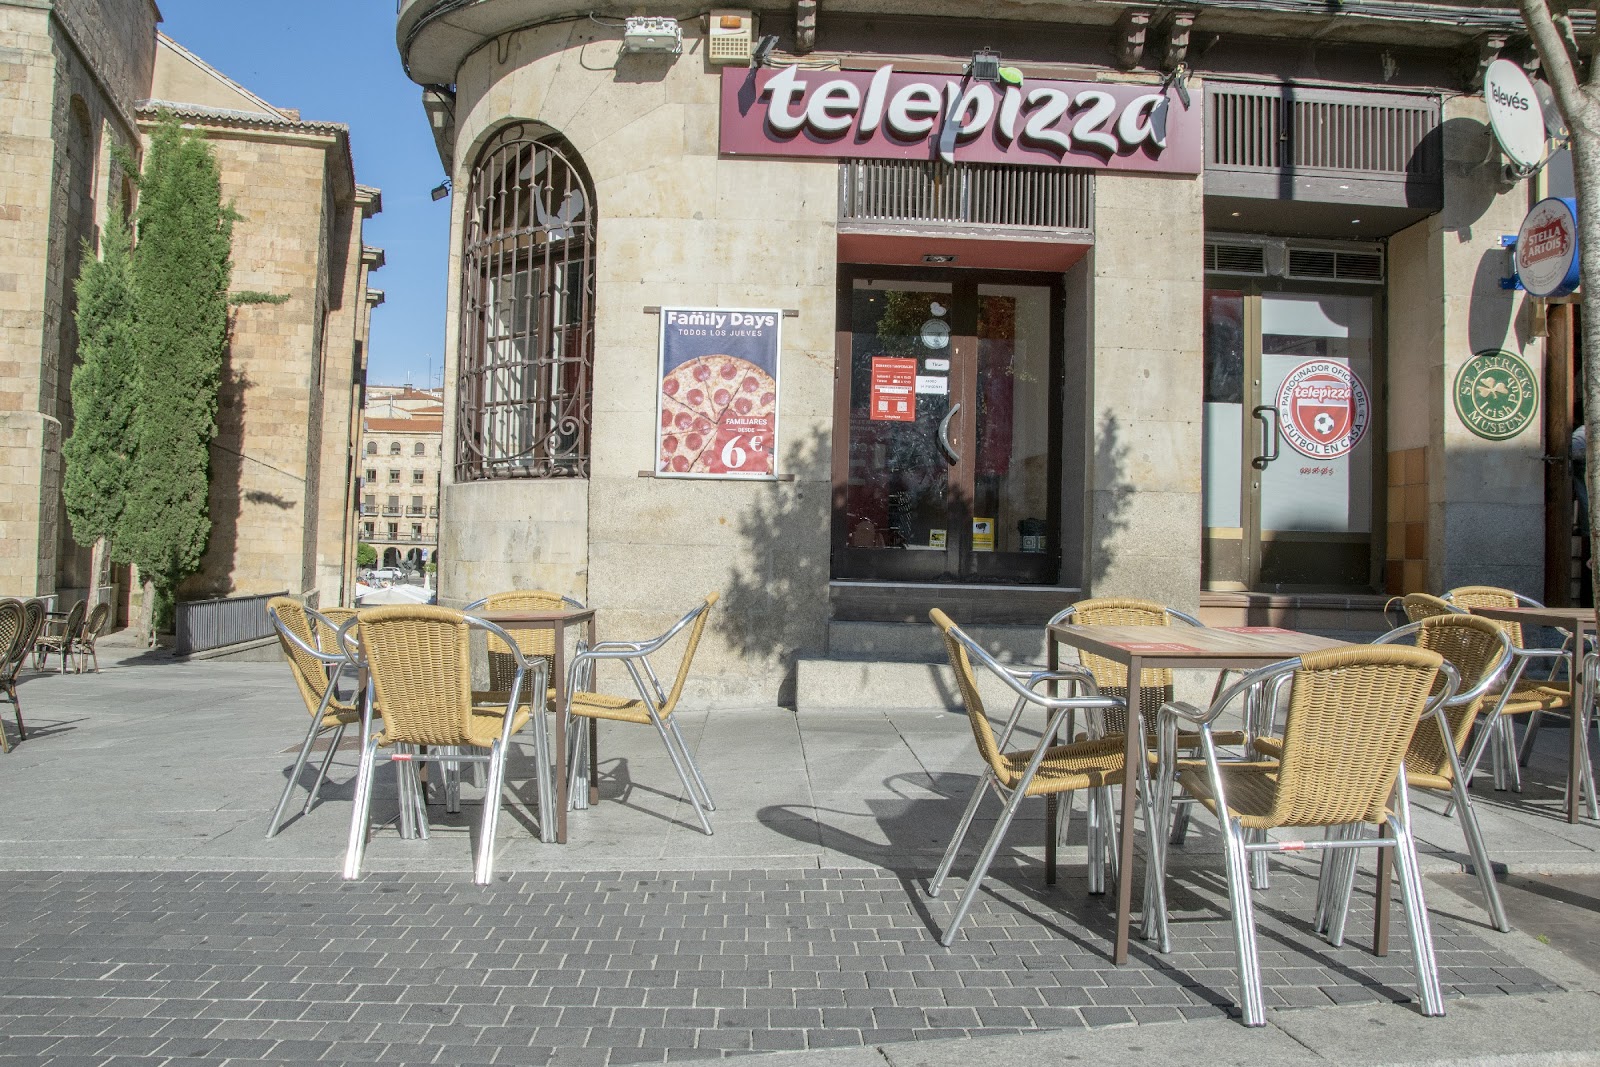 Telepizza Salamanca, Mercado - Comida a Domicilio